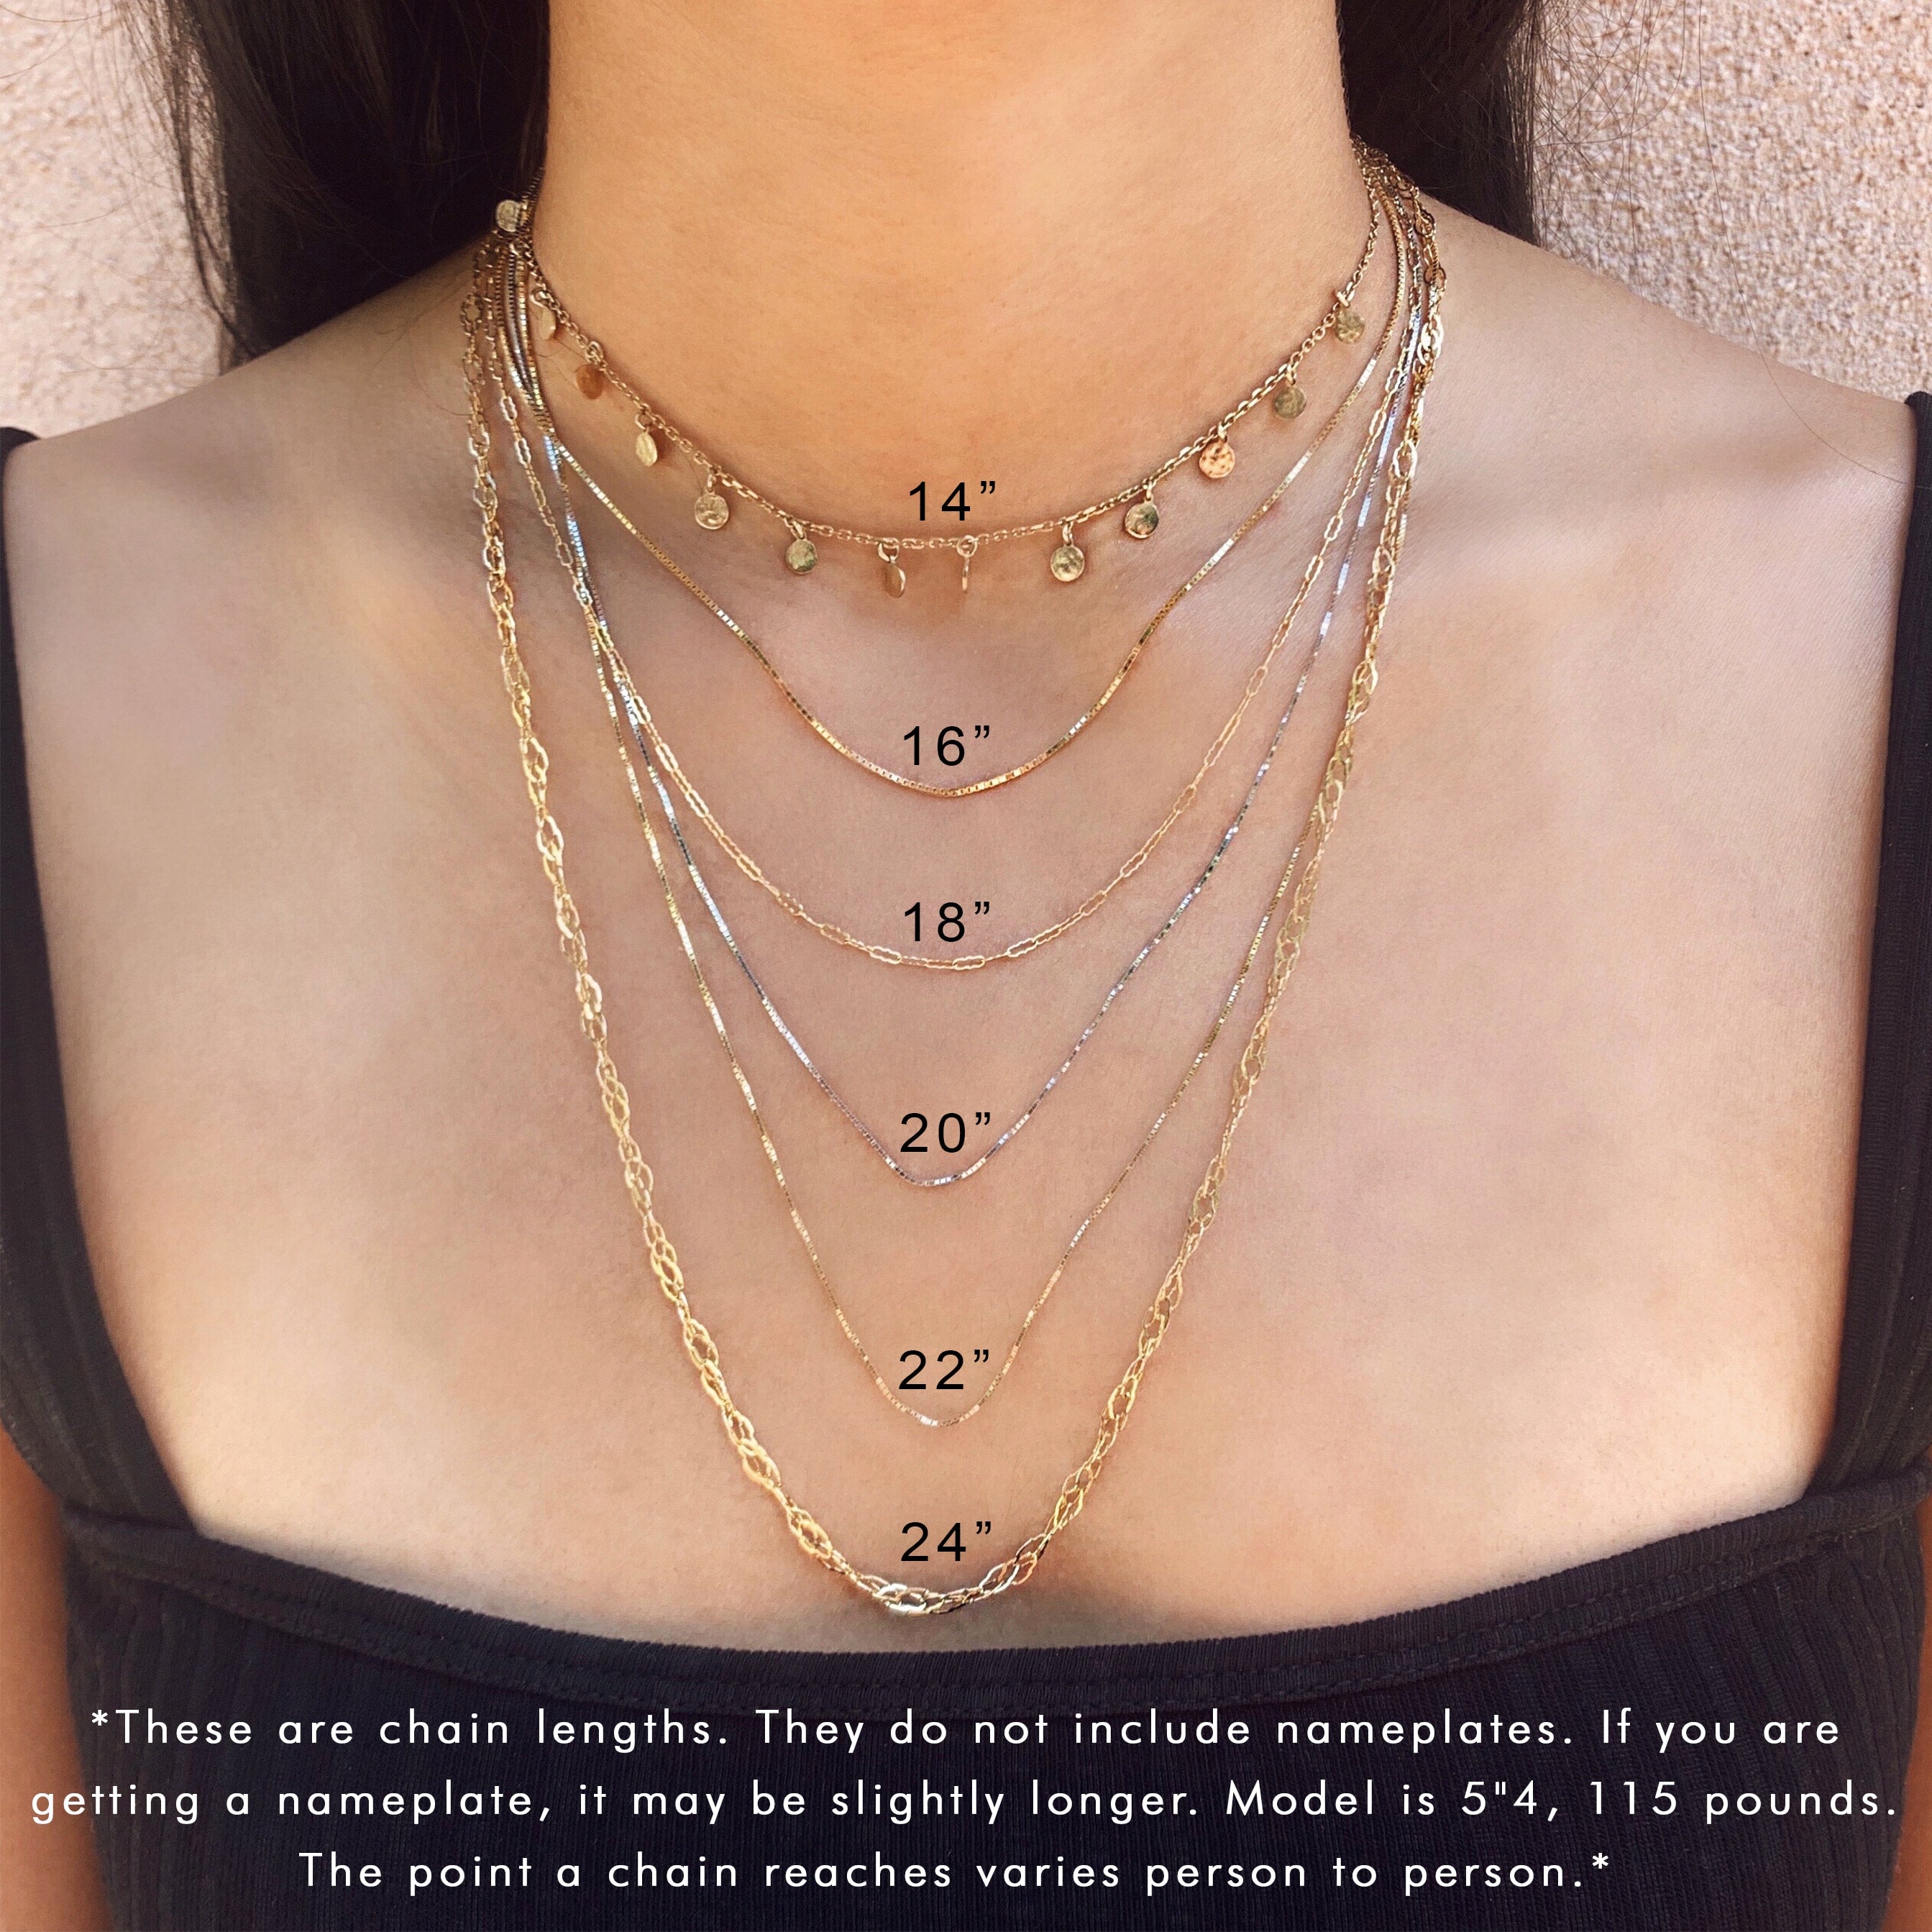 16” Thin Chain Necklace in 18k Gold Vermeil | Kendra Scott